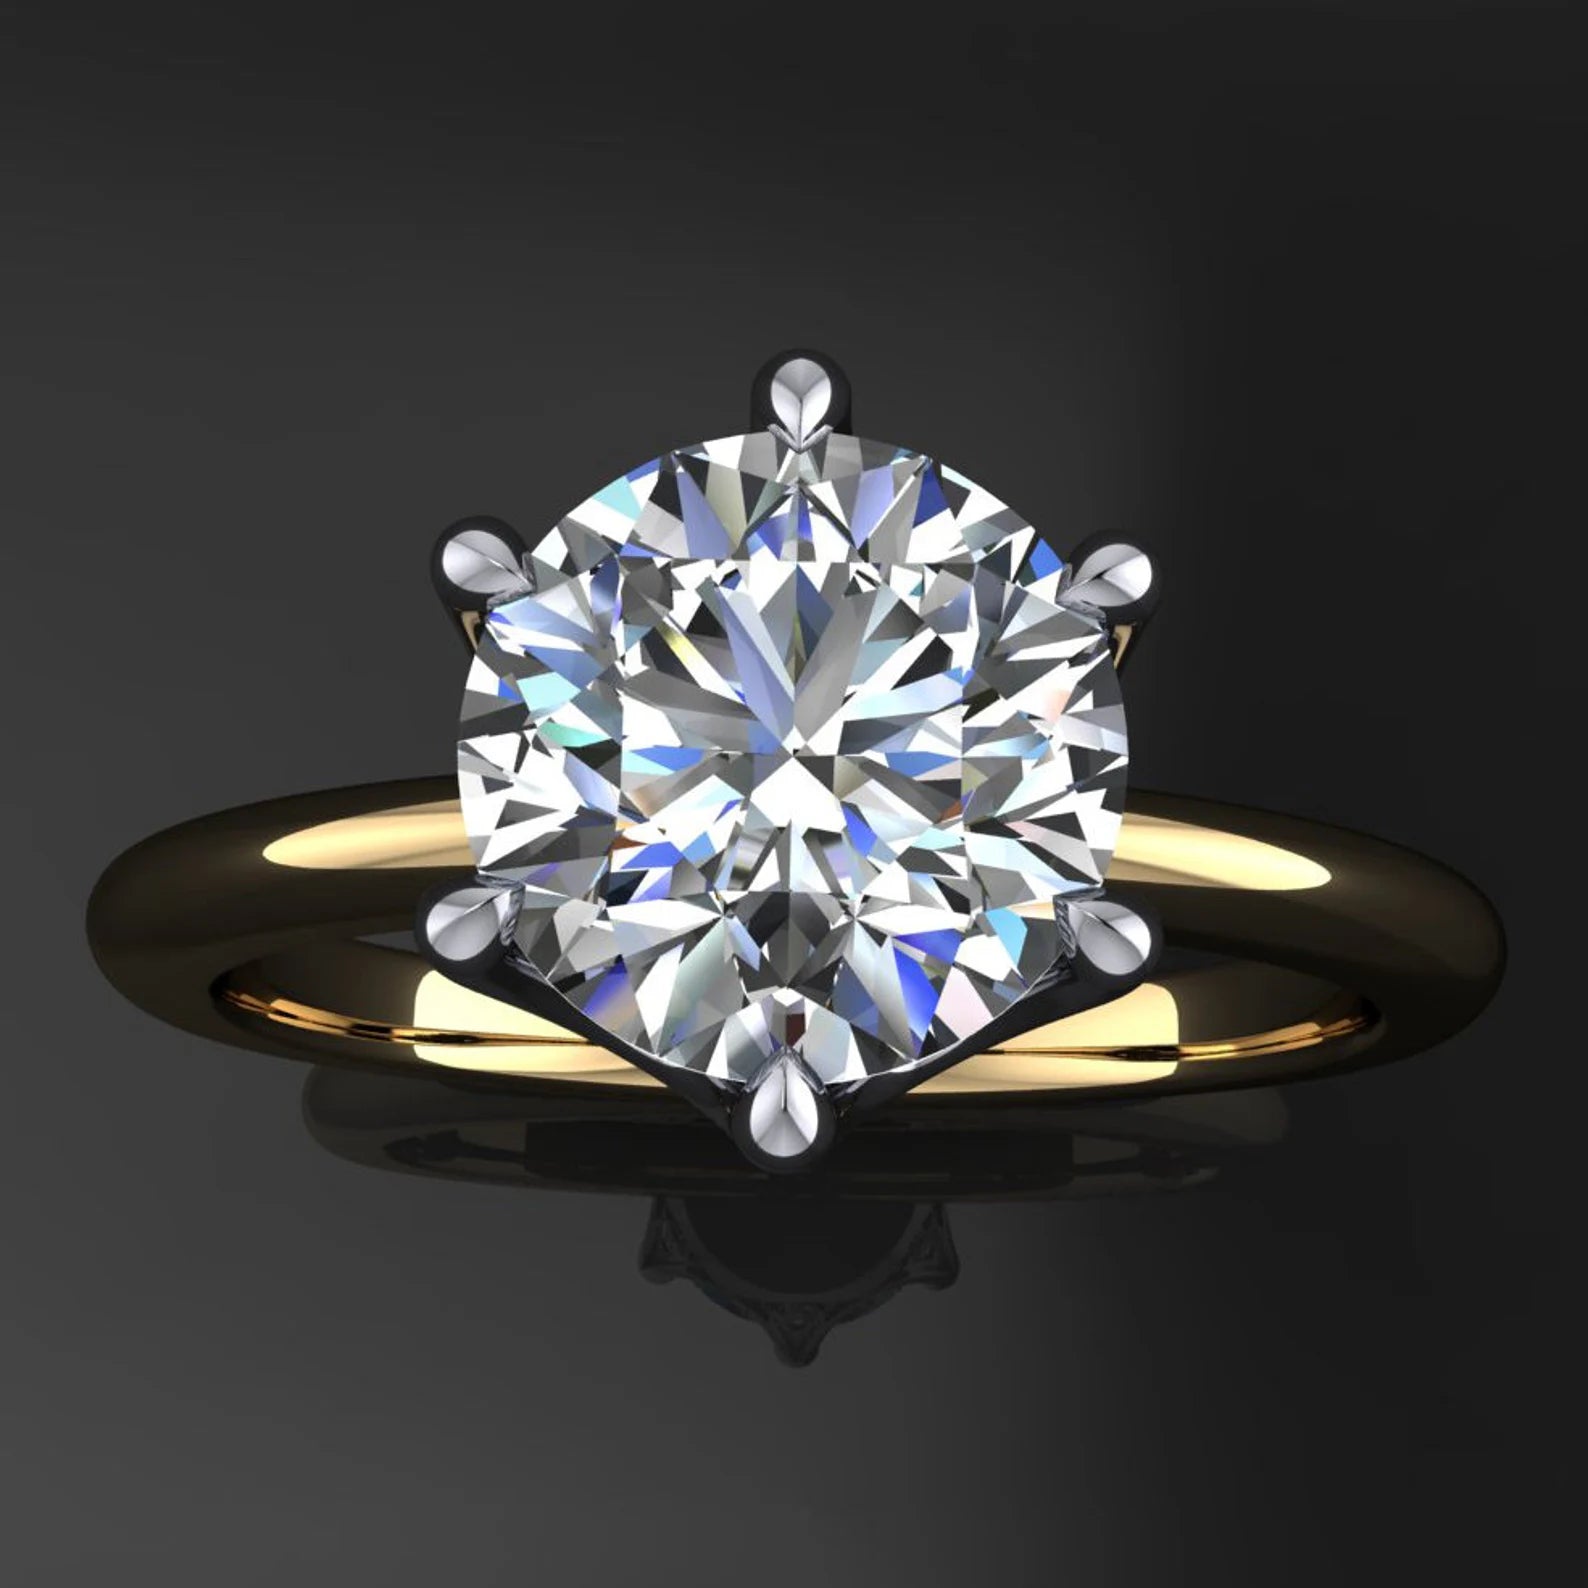 amada ring - 1.5 carat moissanite engagement ring, diamond accents - J Hollywood Designs